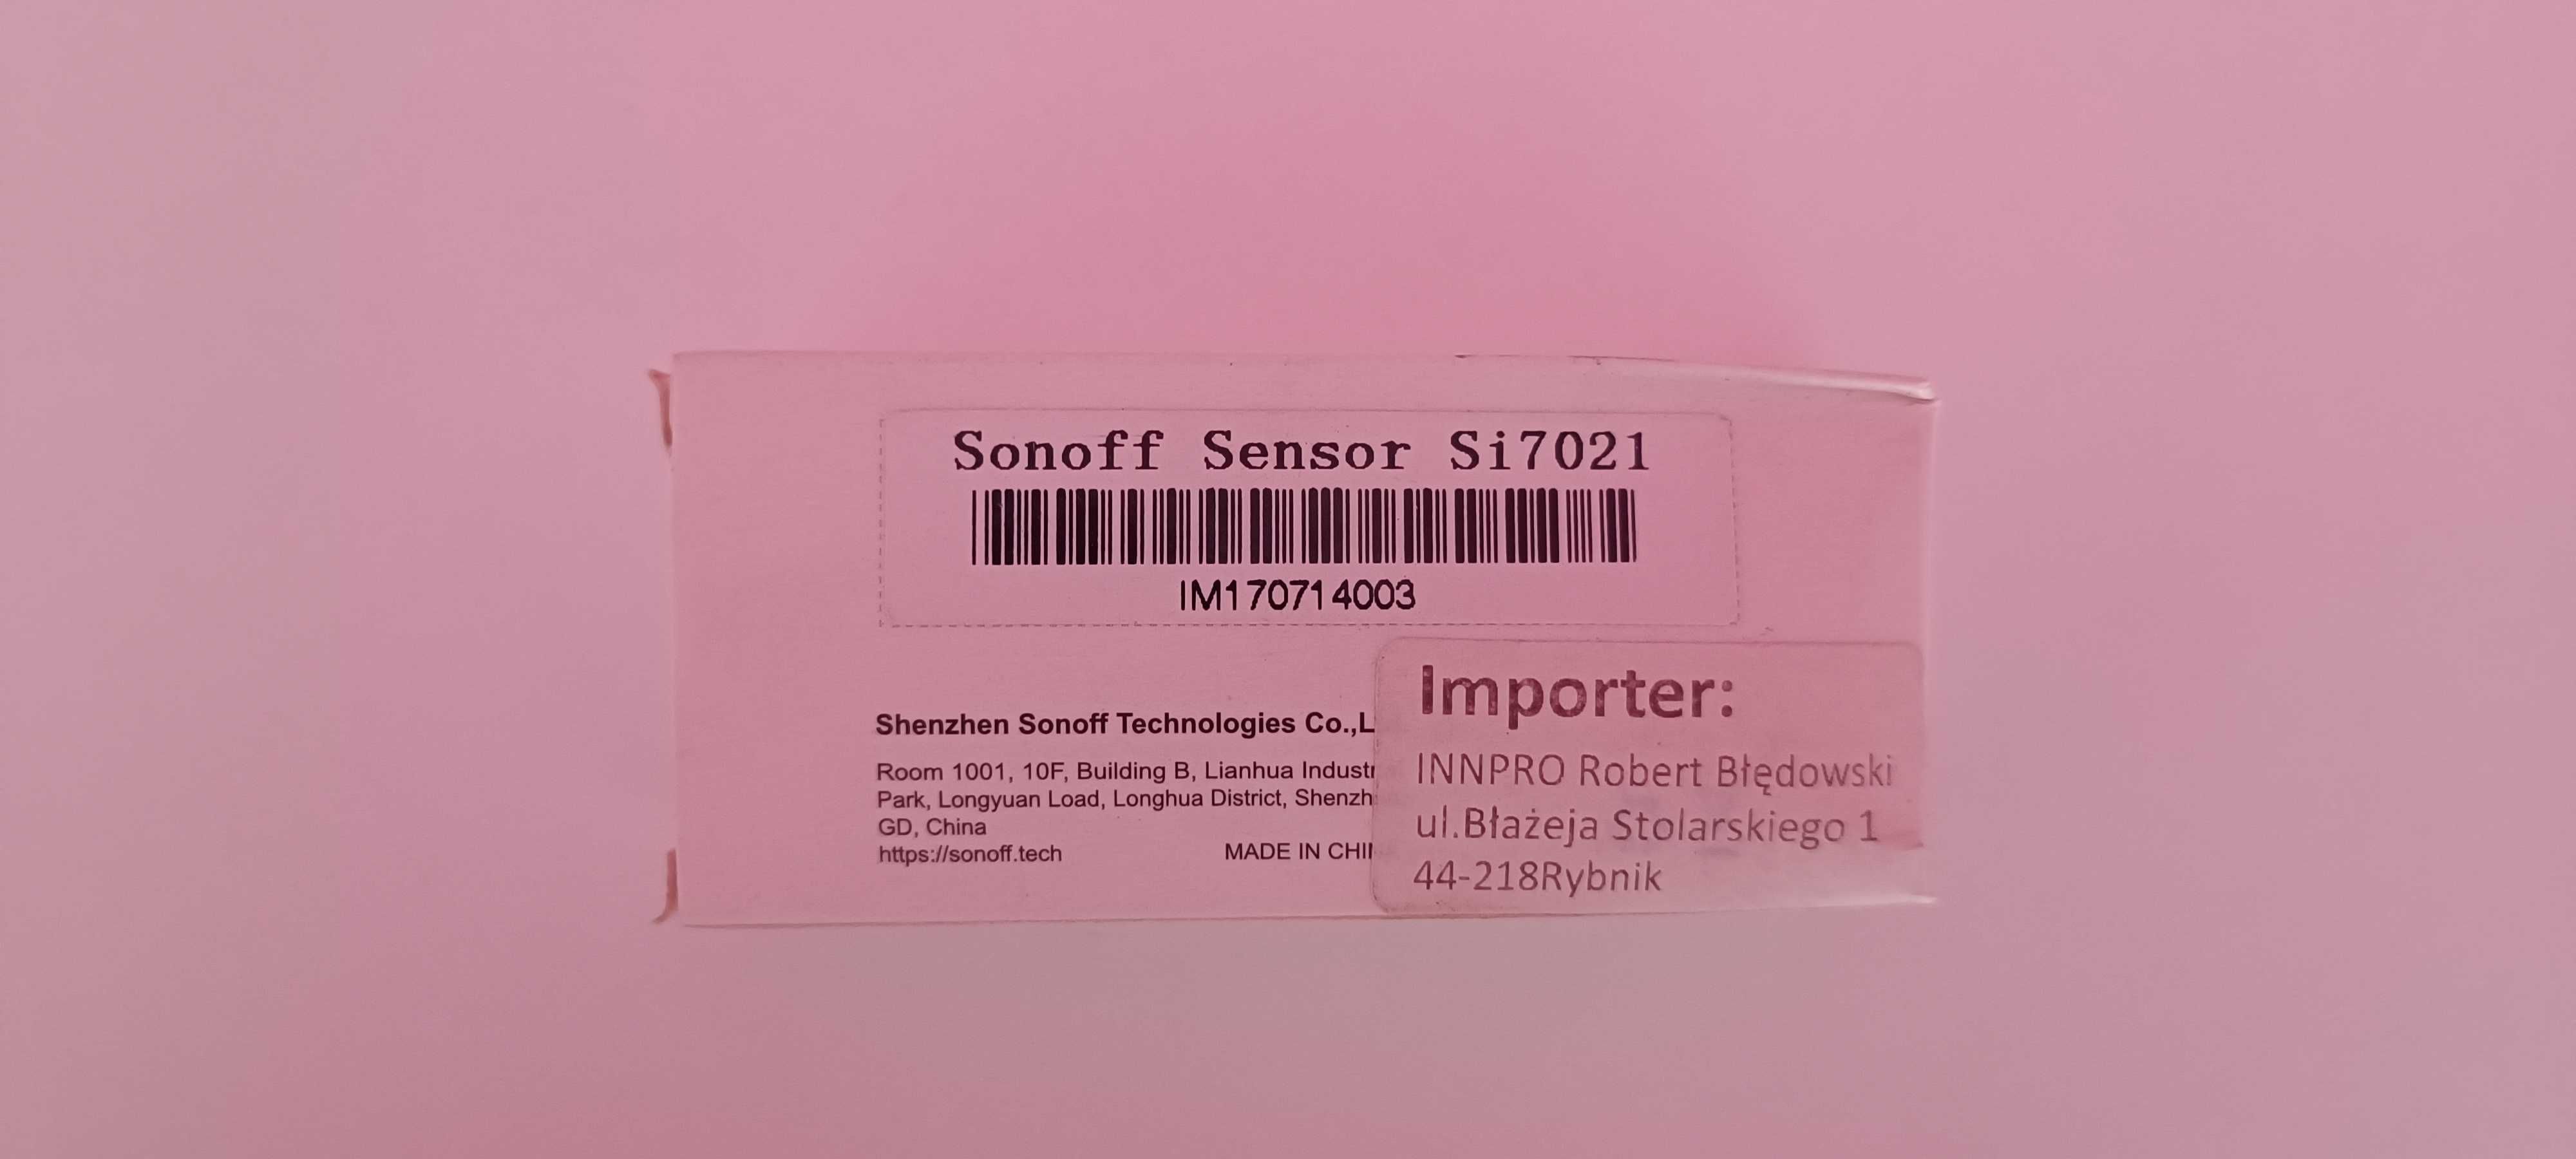 Sensor Sonoff Si7021